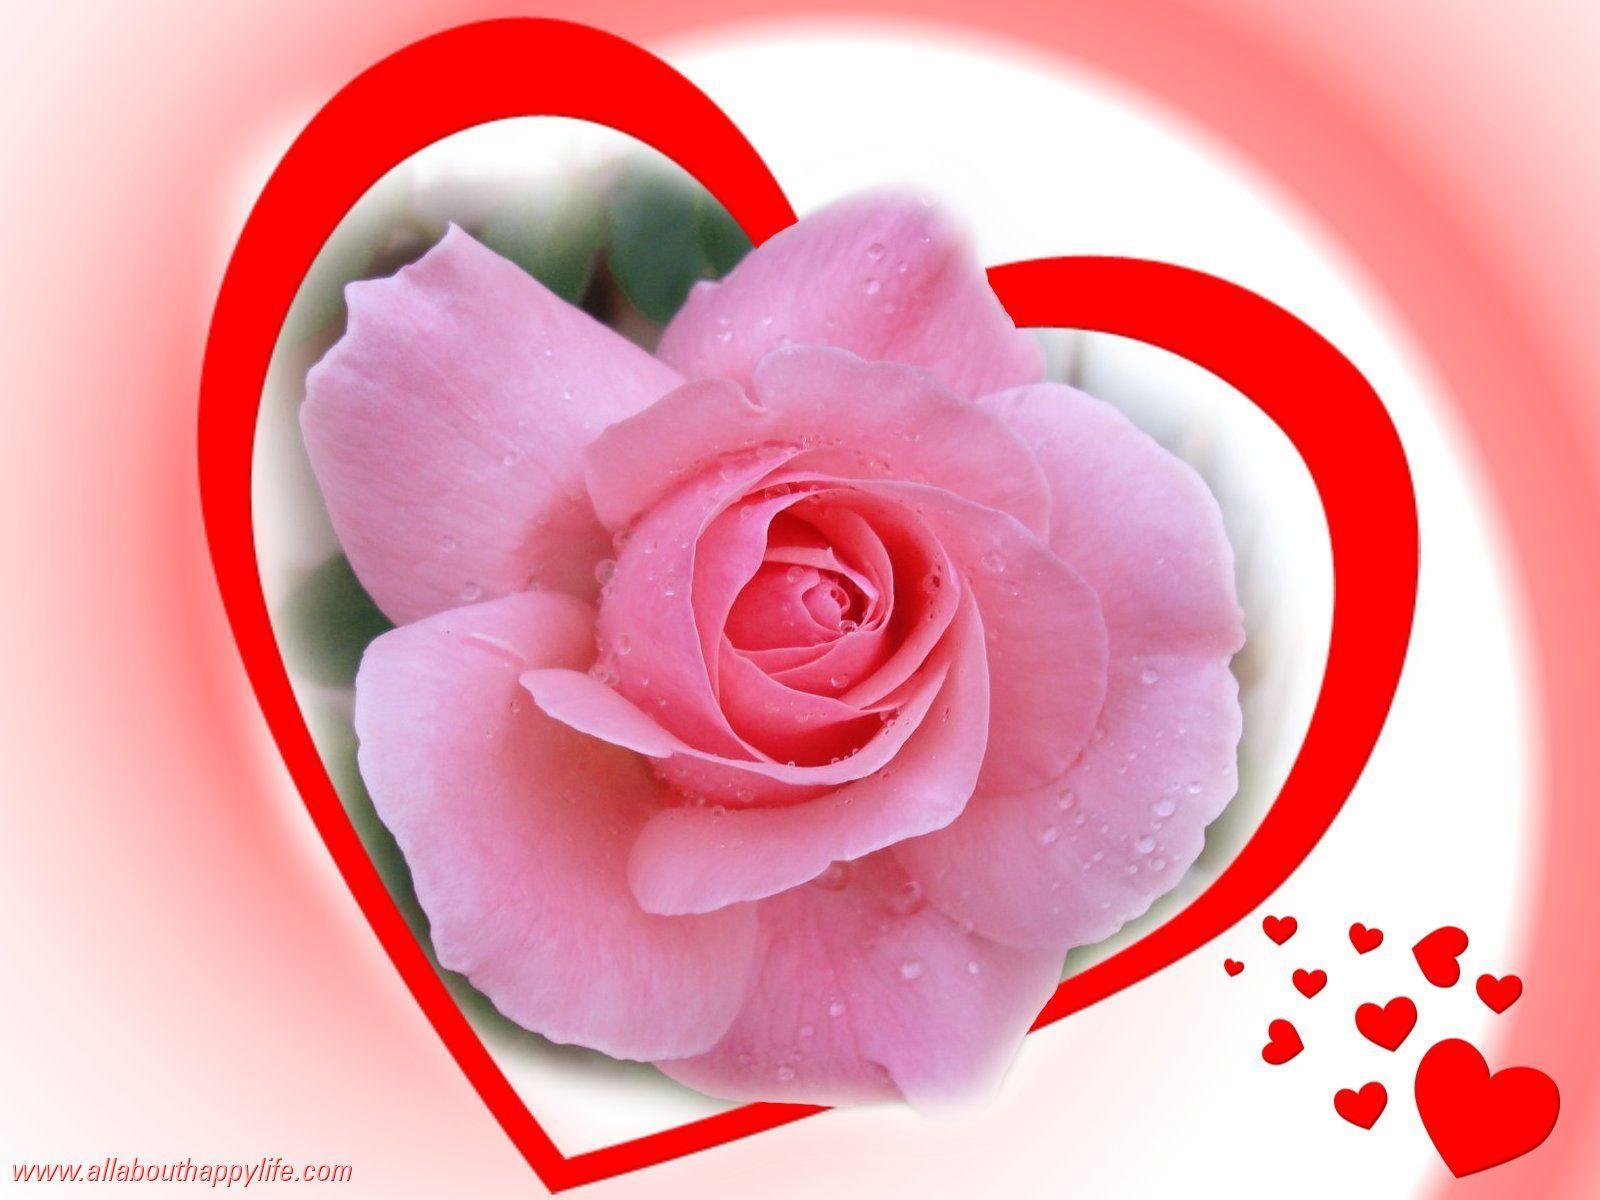 Best Rose And Love Image HD Desktop Of Mobile